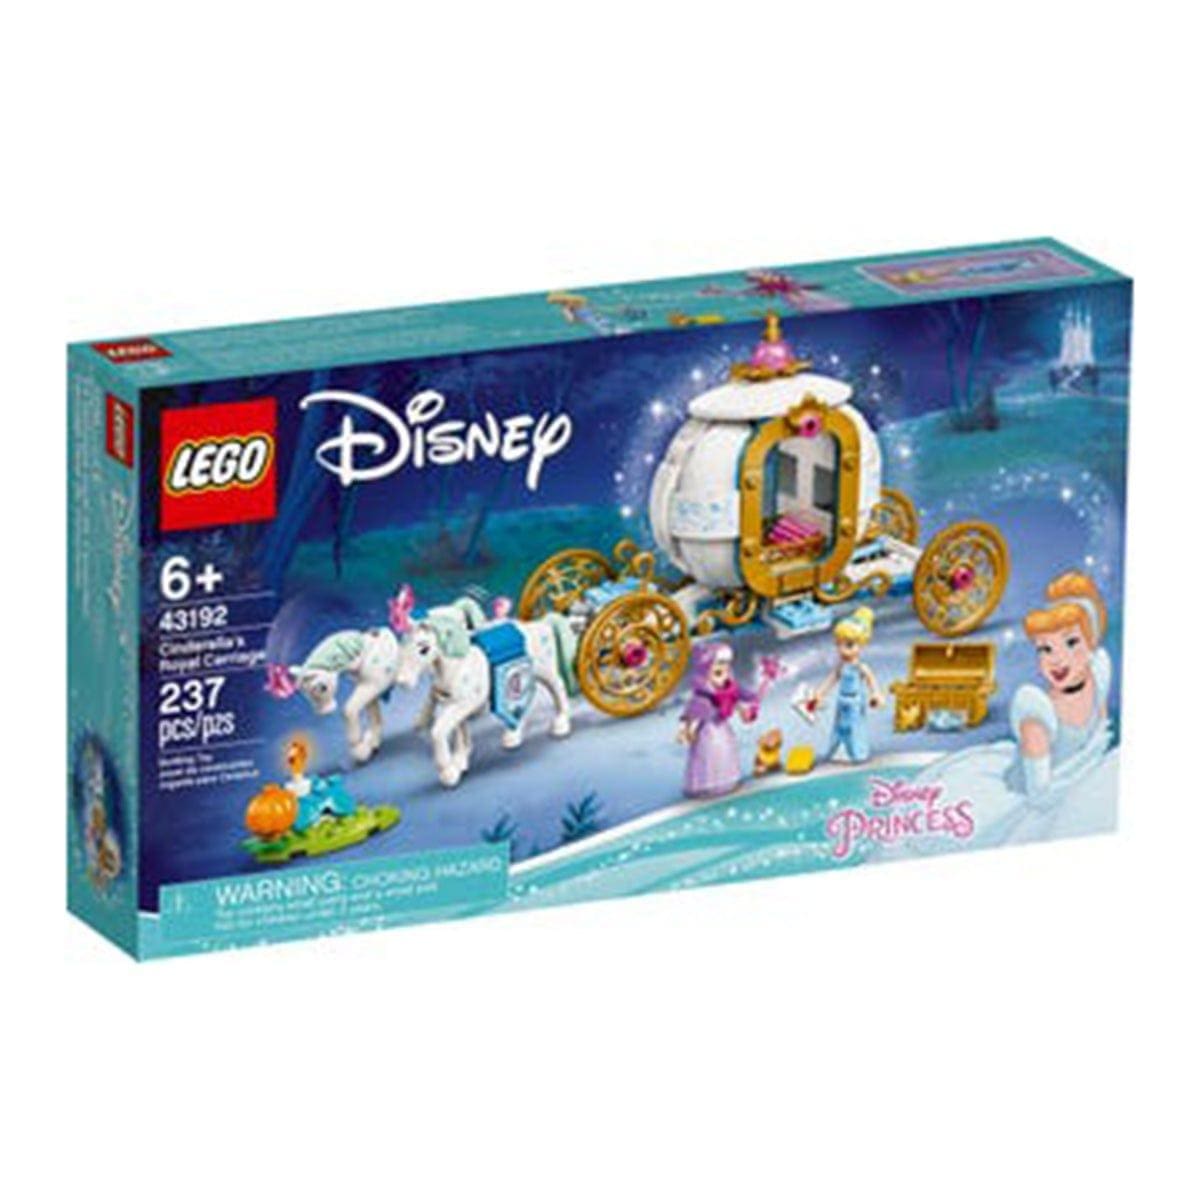 LEGO JOUET K.I.D. INC Toys & Games Cinderella’s Royal Carriage, Lego Disney Princess, Ages 6+